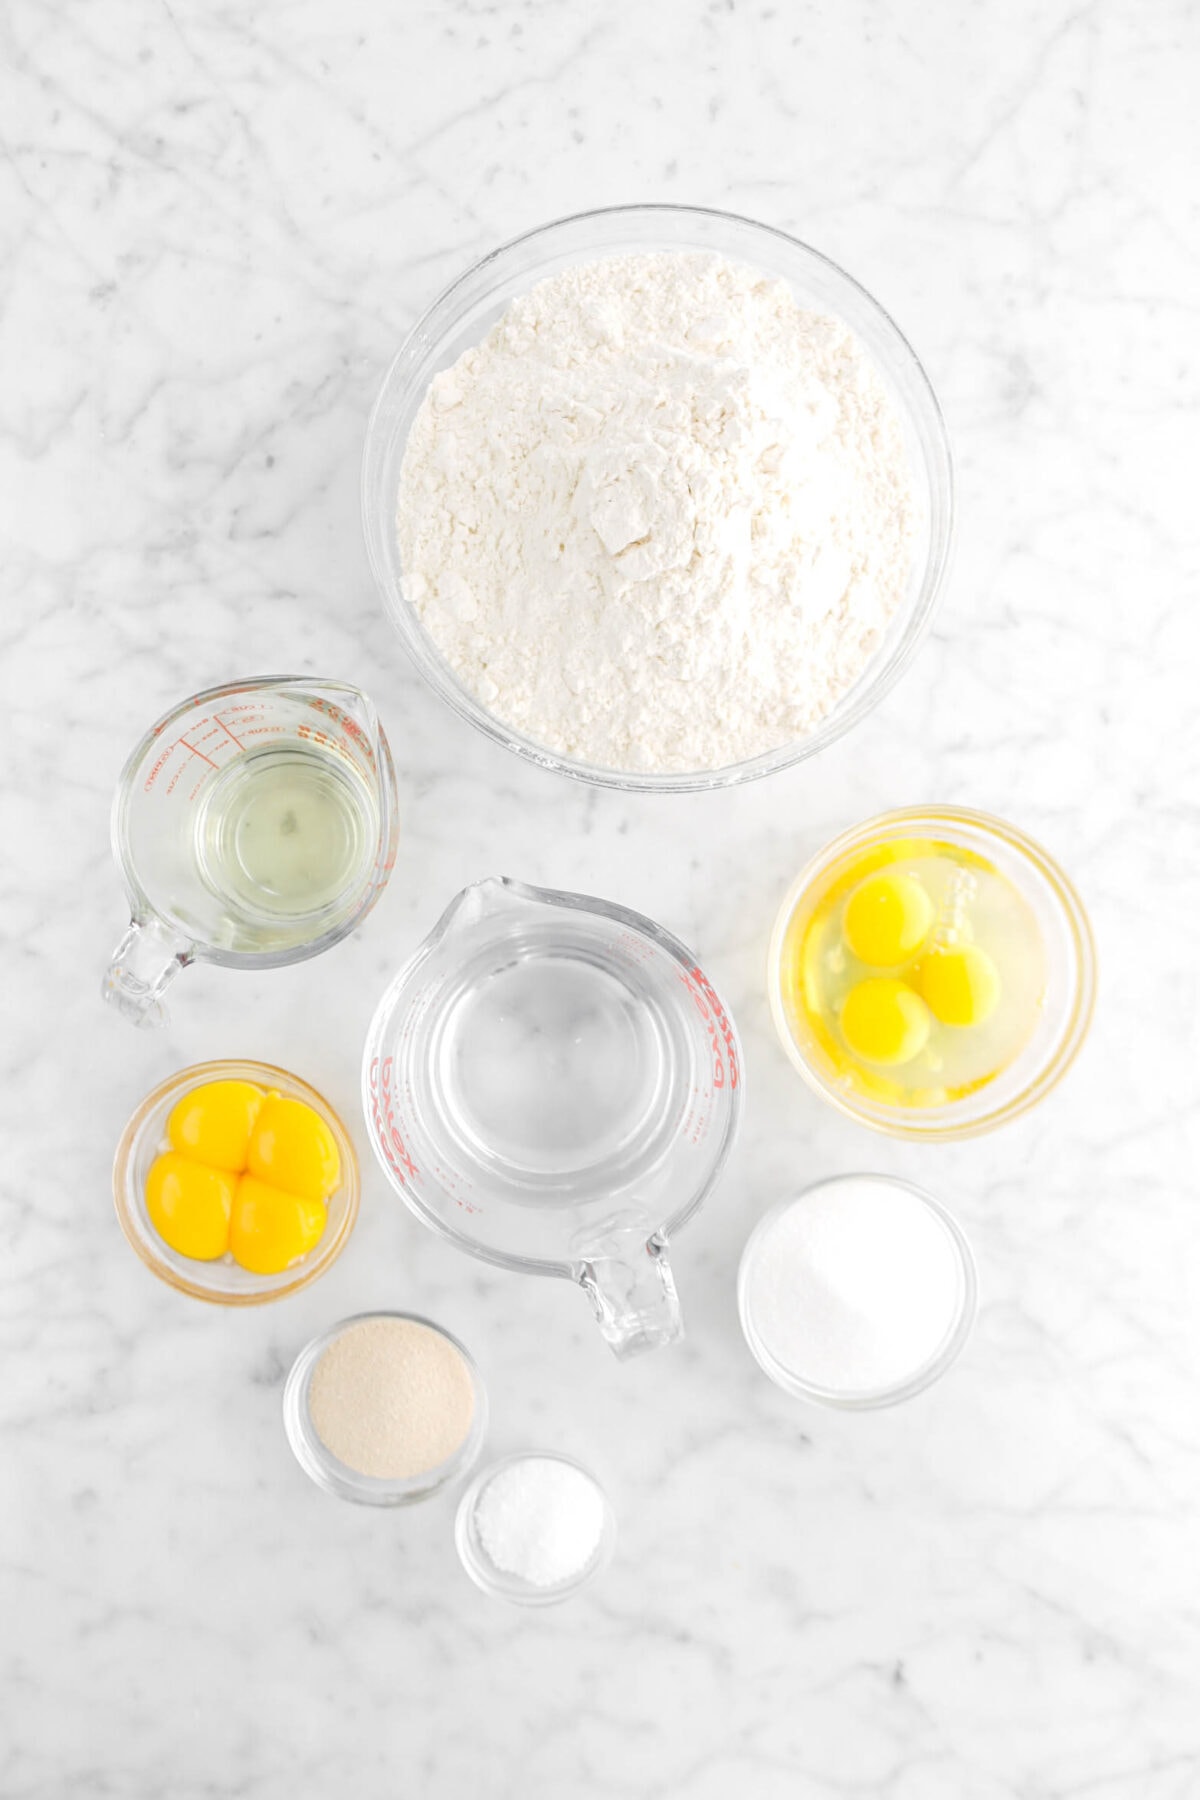 flour, oil eggs, water, egg yolks, yeast, salt, and sugar on marble surface